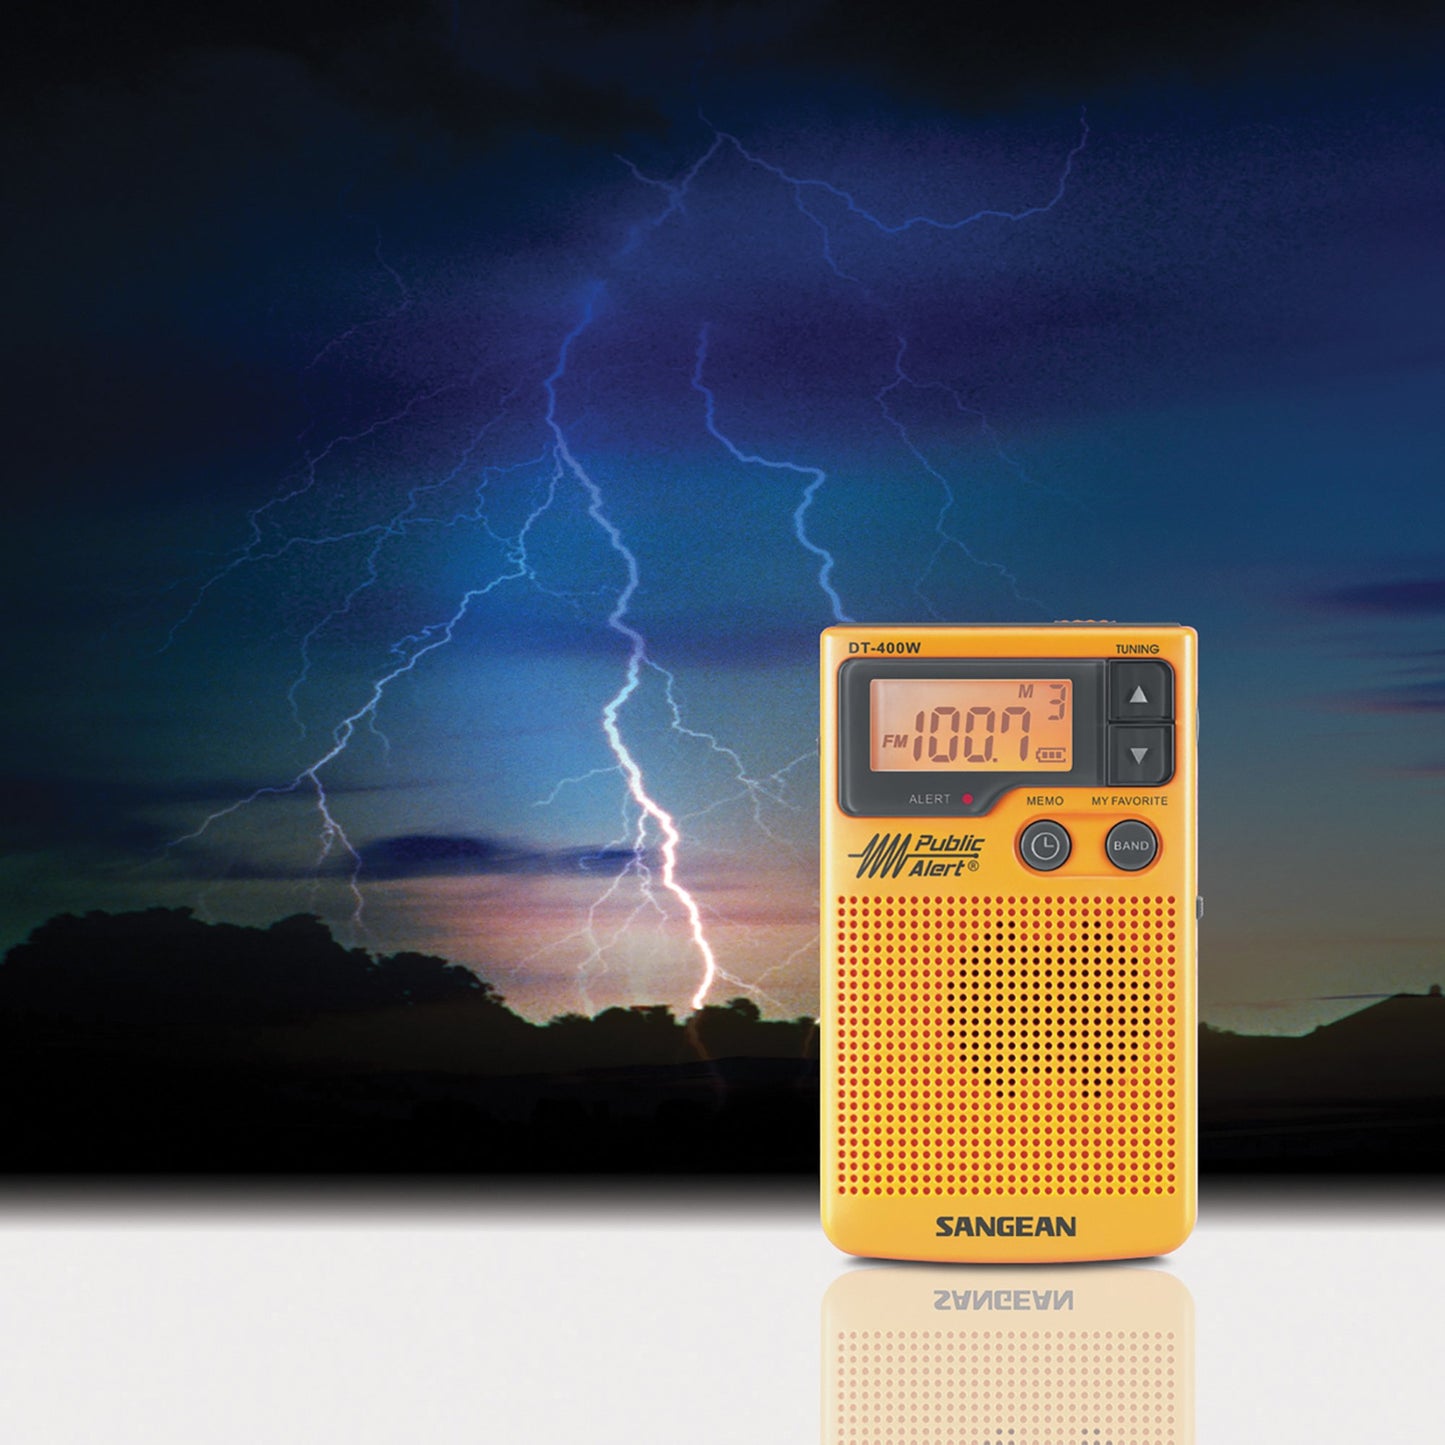 SANGEAN SNGDT400W DT-400W Portable AM/FM Pocket Digital Clock Radio